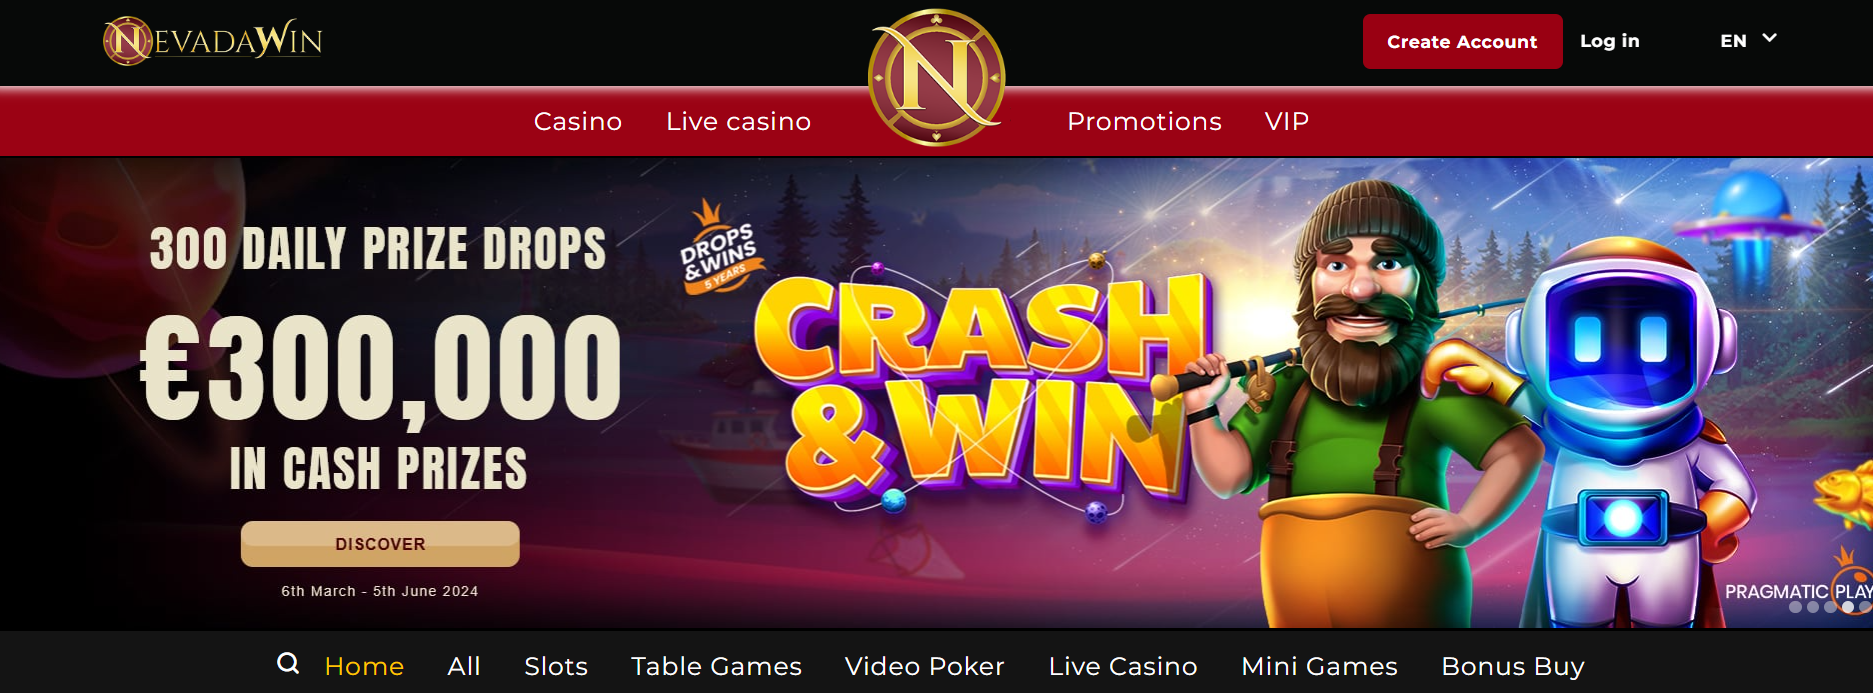 nevada win casino bonus